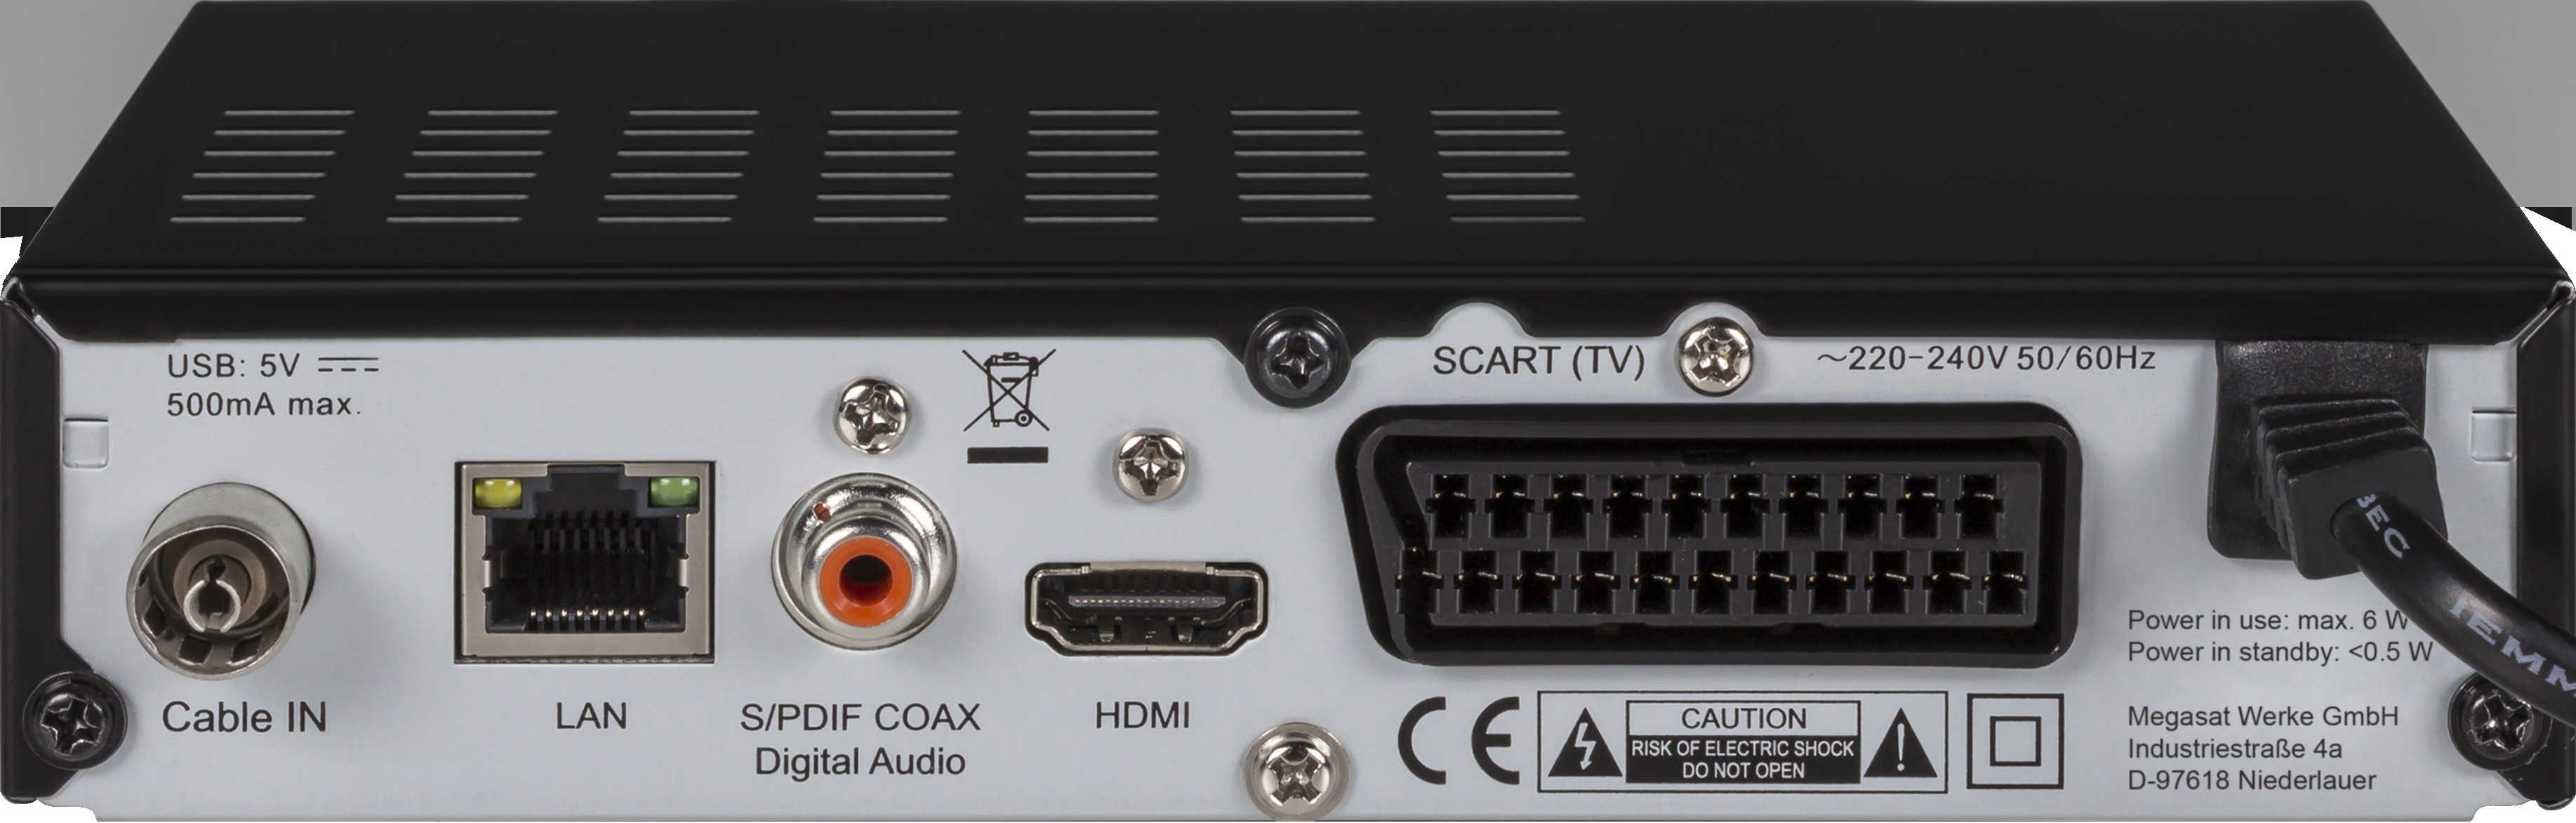 DVB-C, DVB-C2, HD C (HDTV, 200 MEGASAT DVB-C Receiver Schwarz)